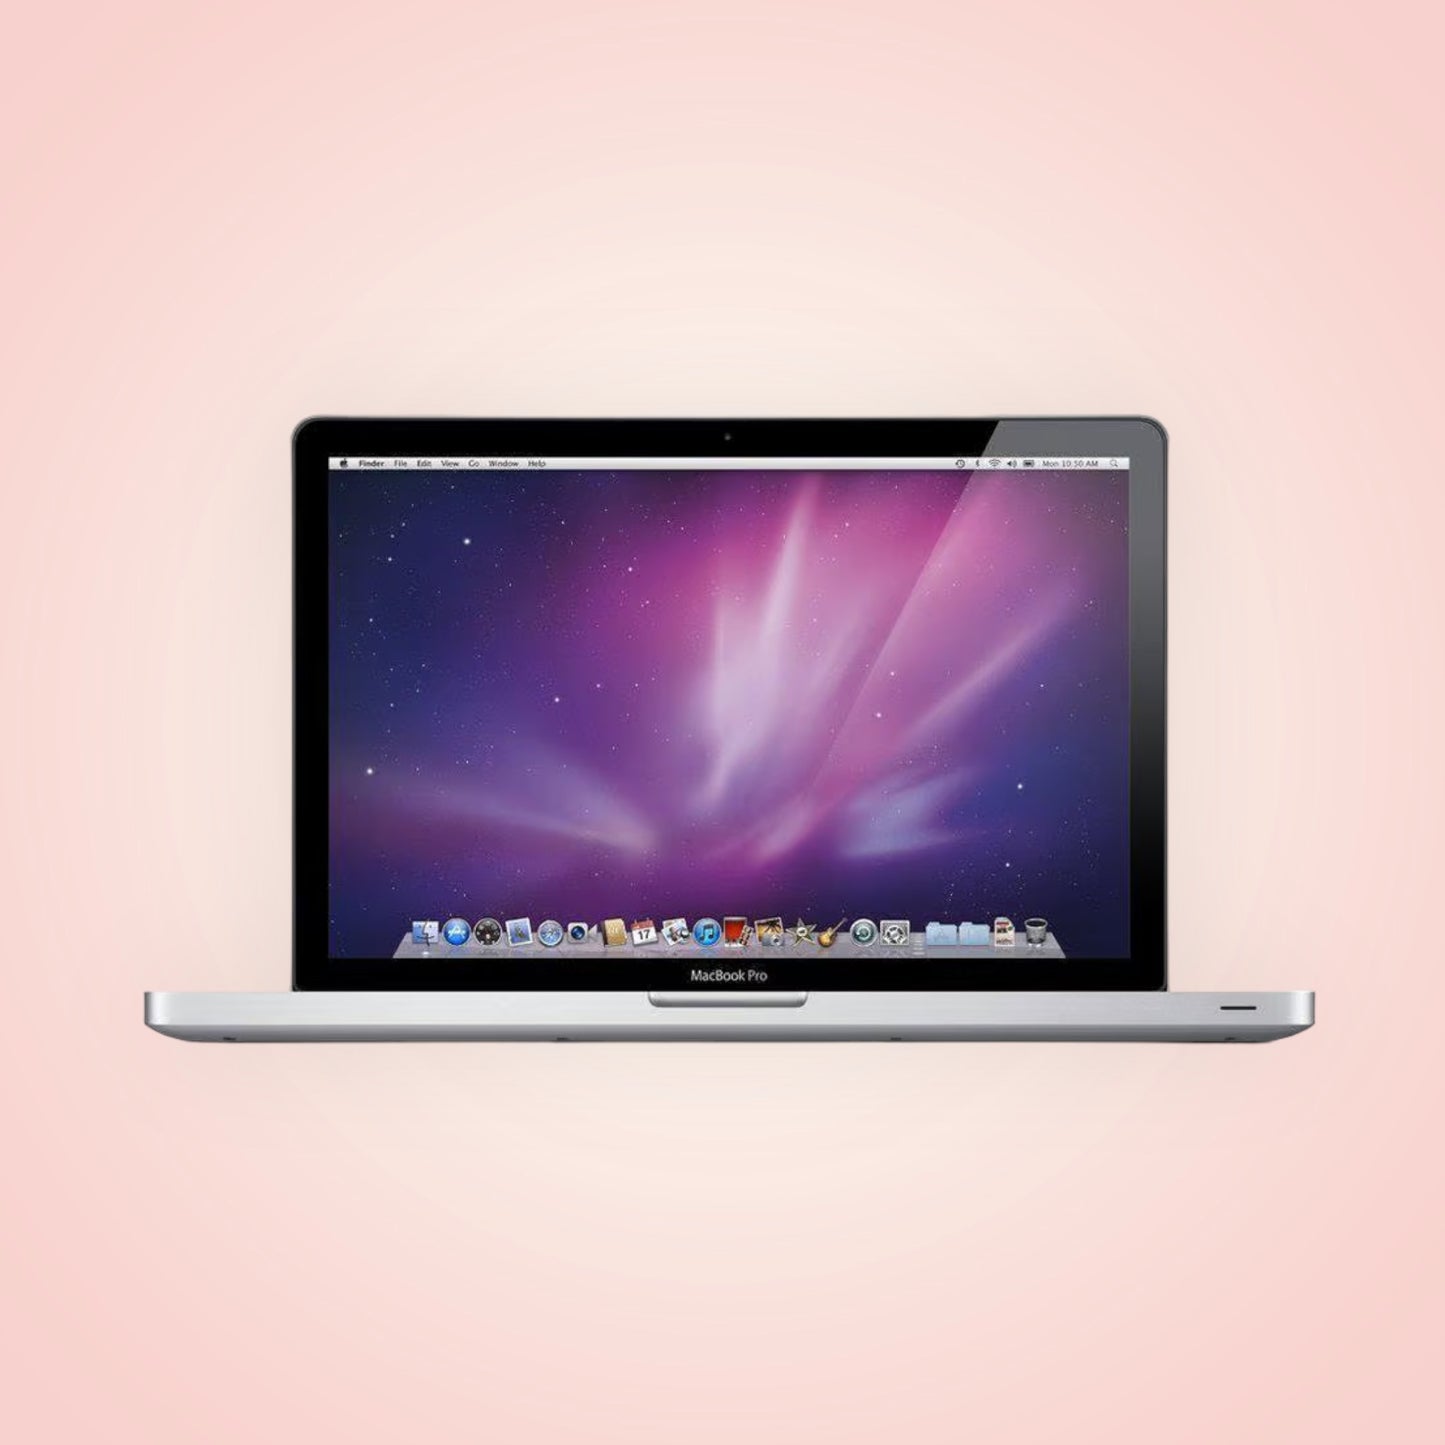 MacBook Pro (13-inch, 2012) - 128GB SSD